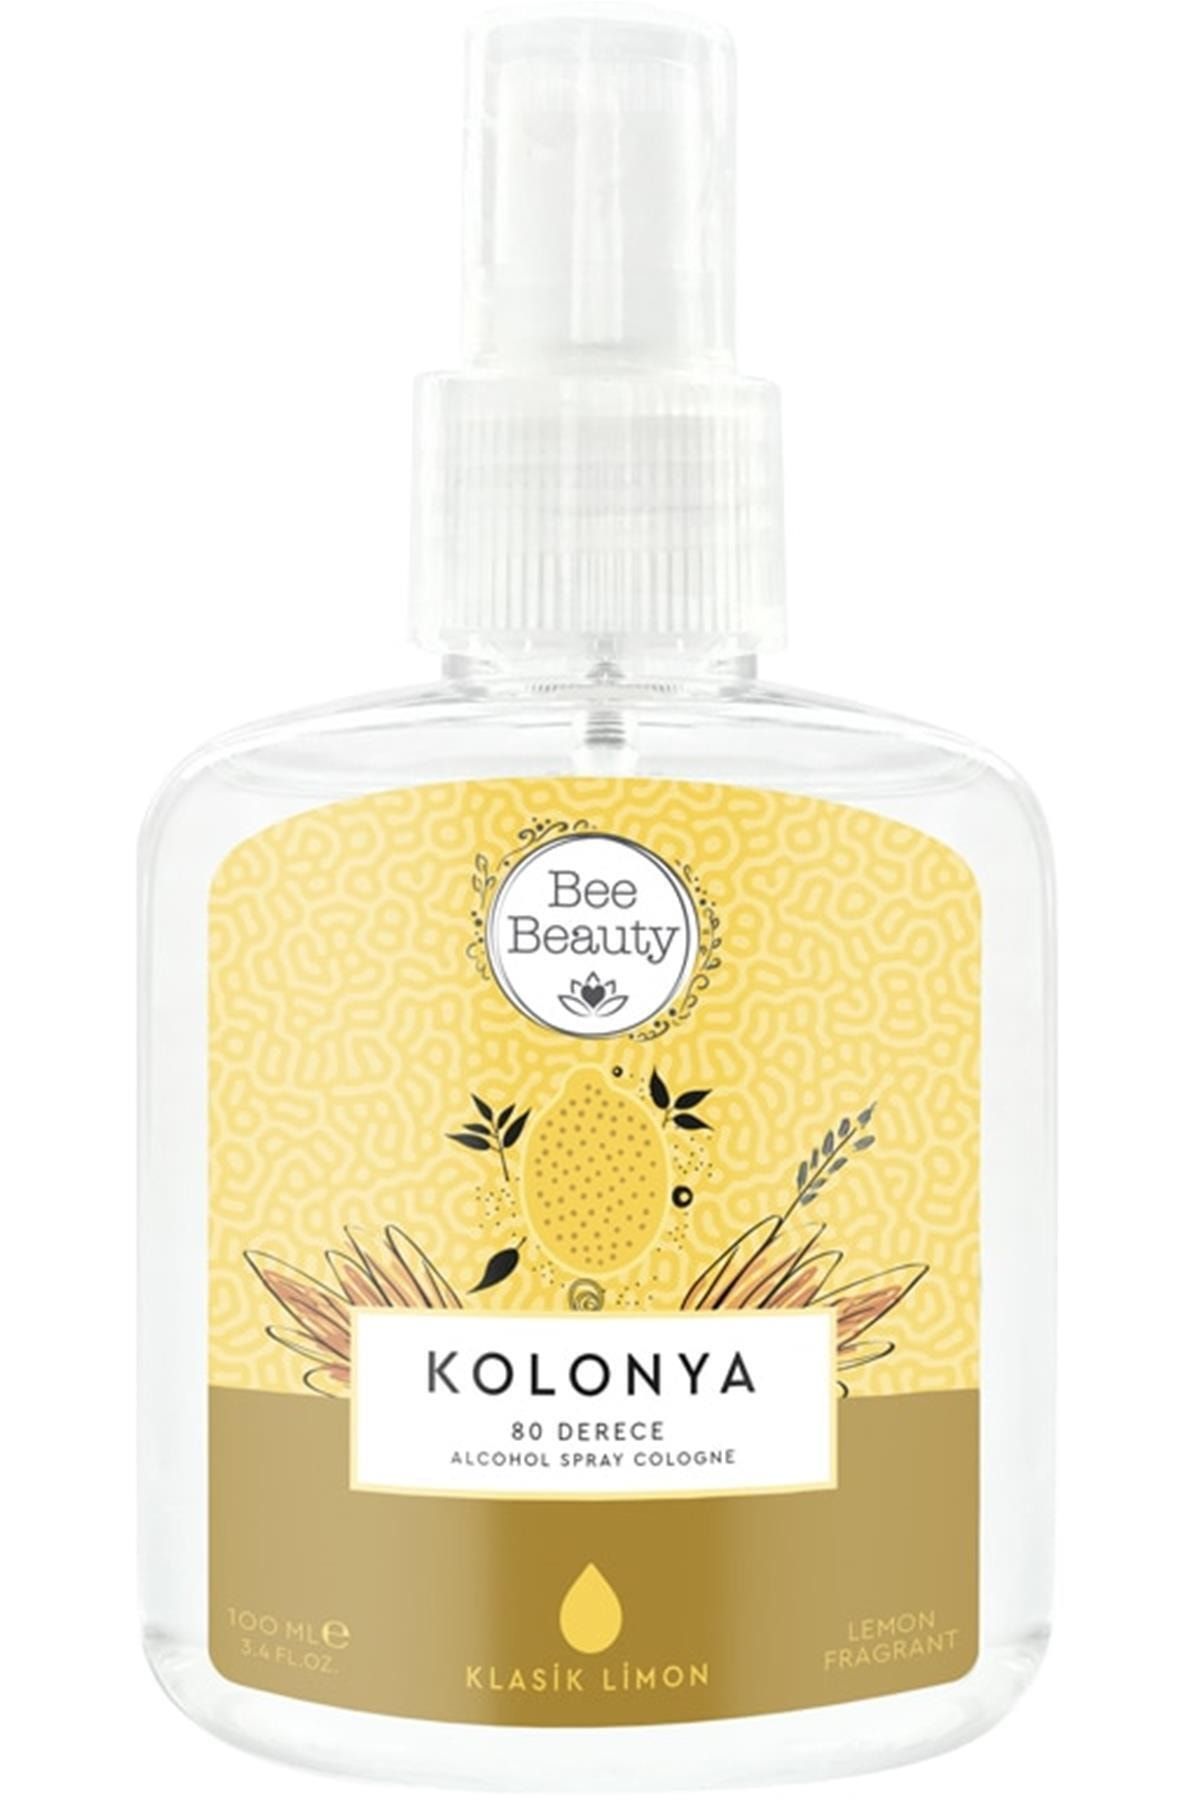 Bee Beauty Marka: Klasik Limon Kolonya 100 Ml Kategori: Kolonya